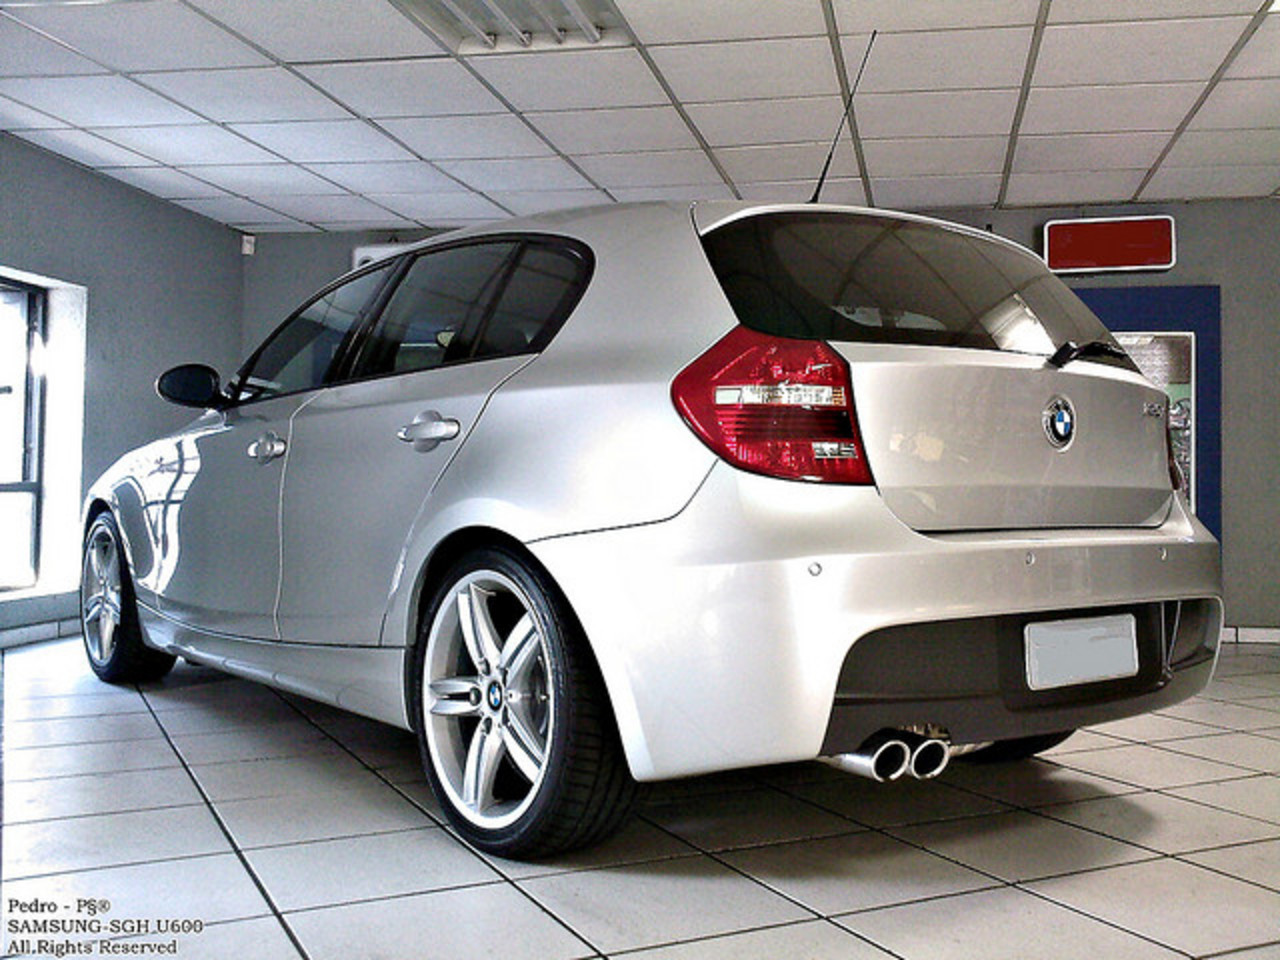 BMW 130i | Flickr - Photo Sharing!